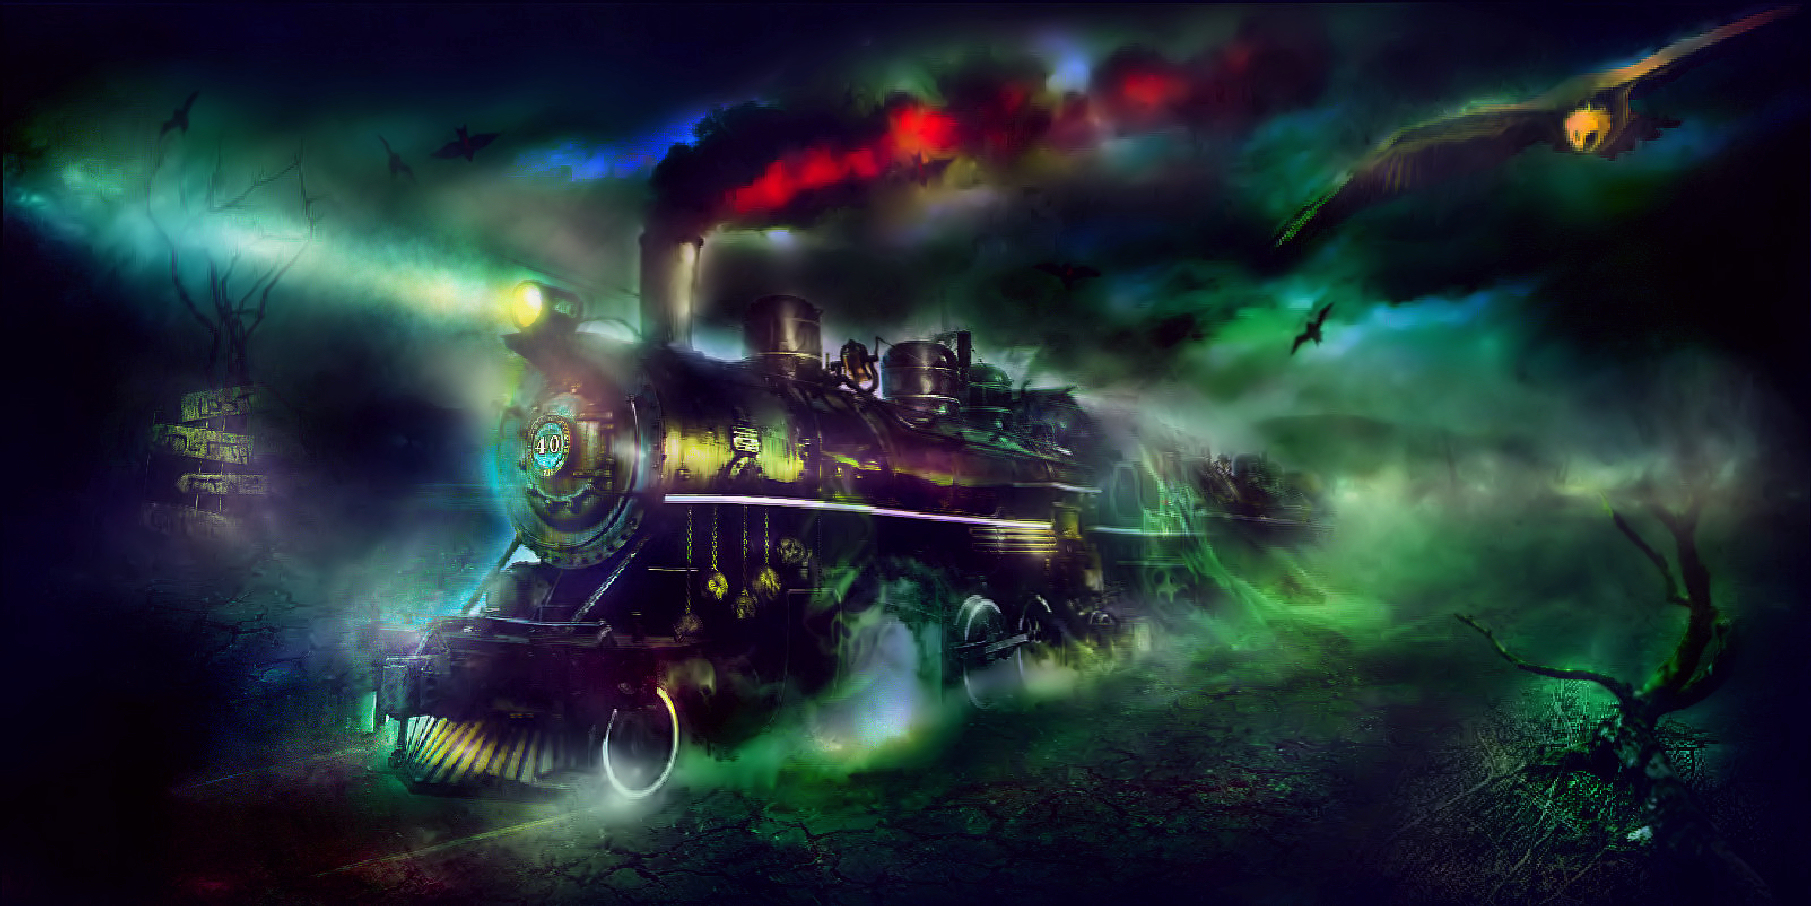 ghost train Image